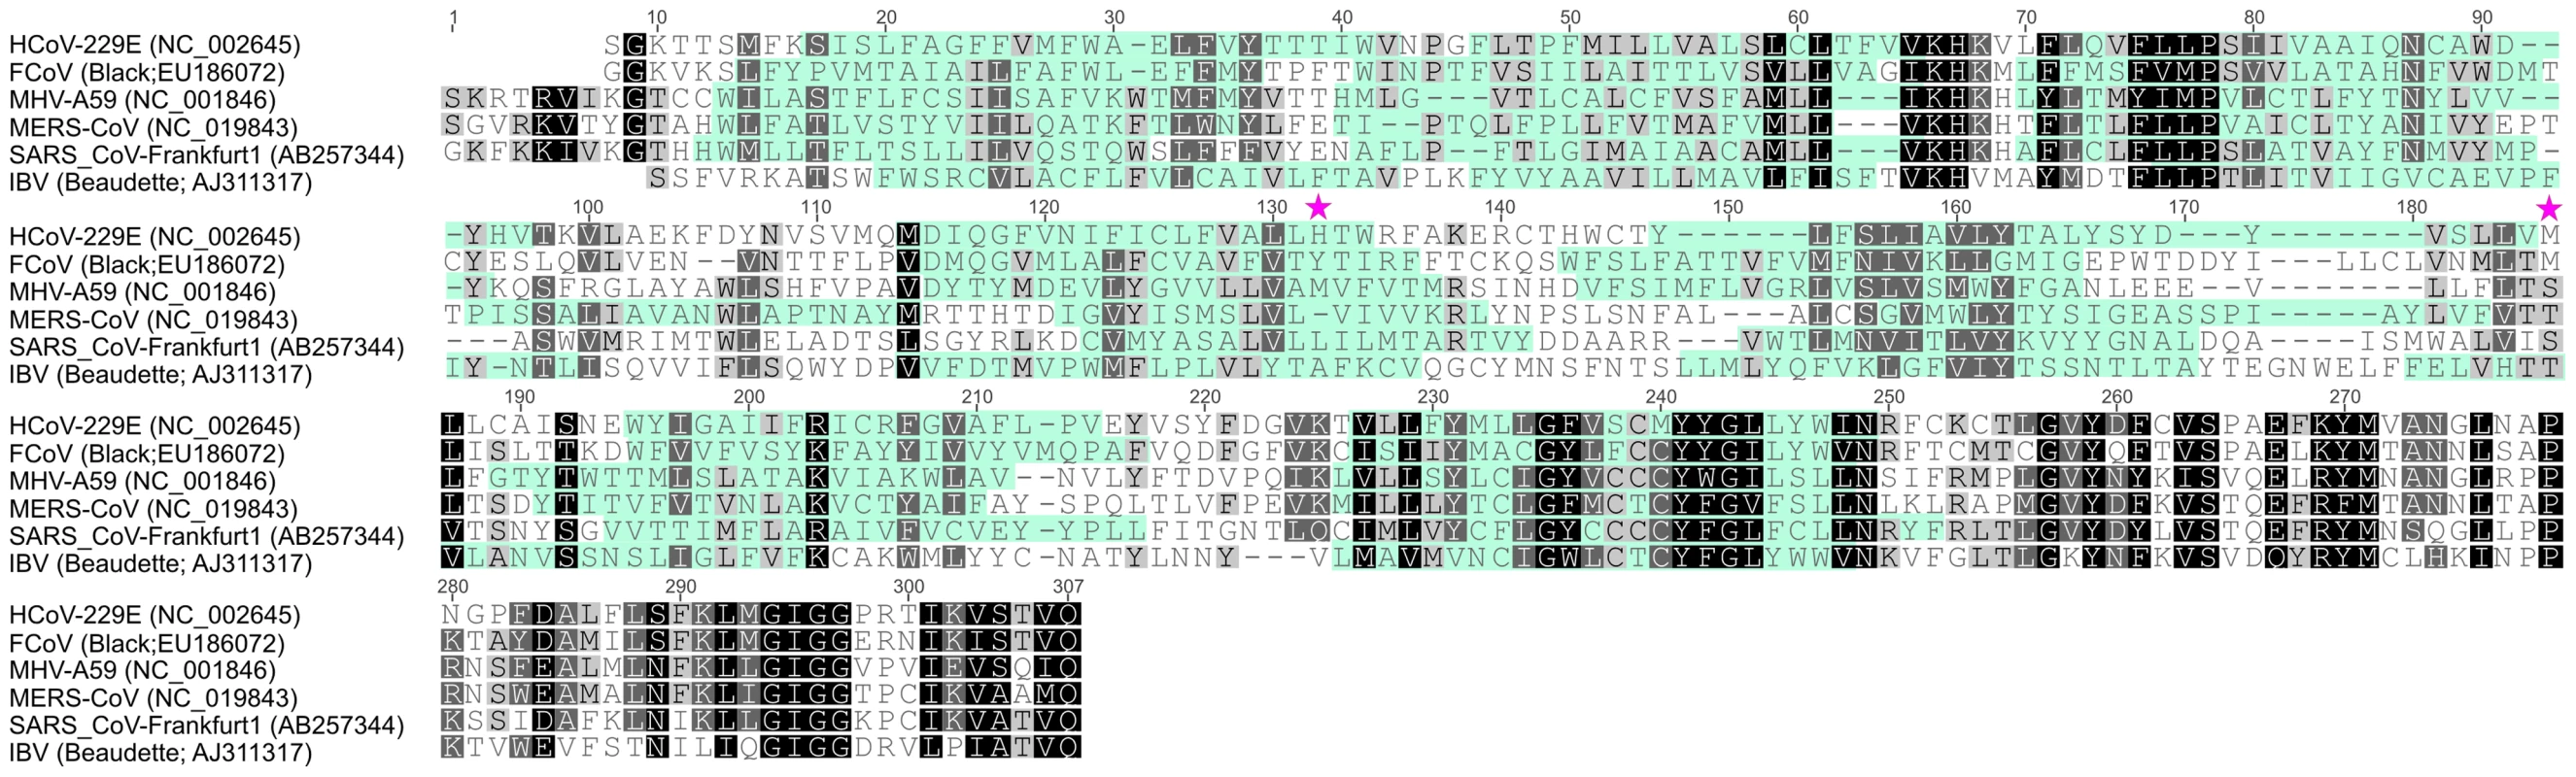 Alignment of coronavirus nsp6 sequences.